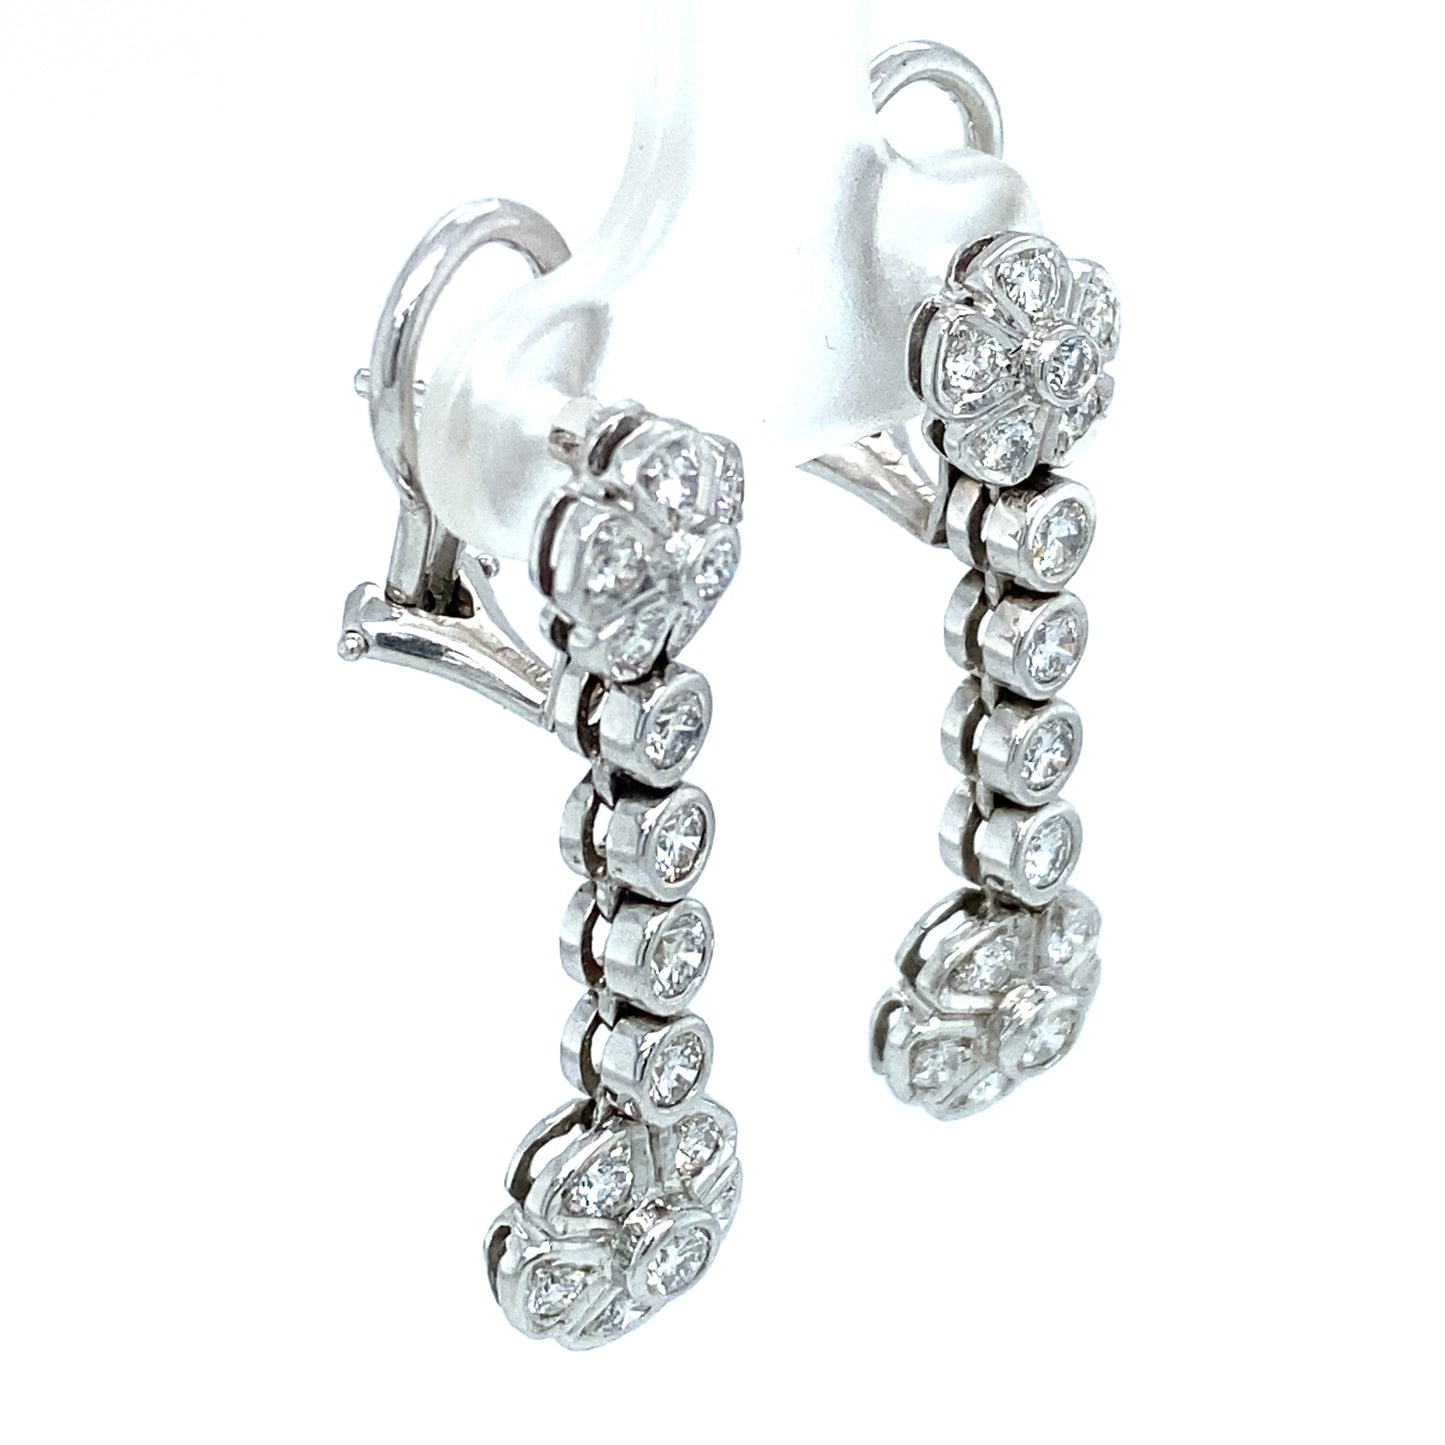 Circa 2000s Diamond Flower Drop Earrings in 18K White Gold